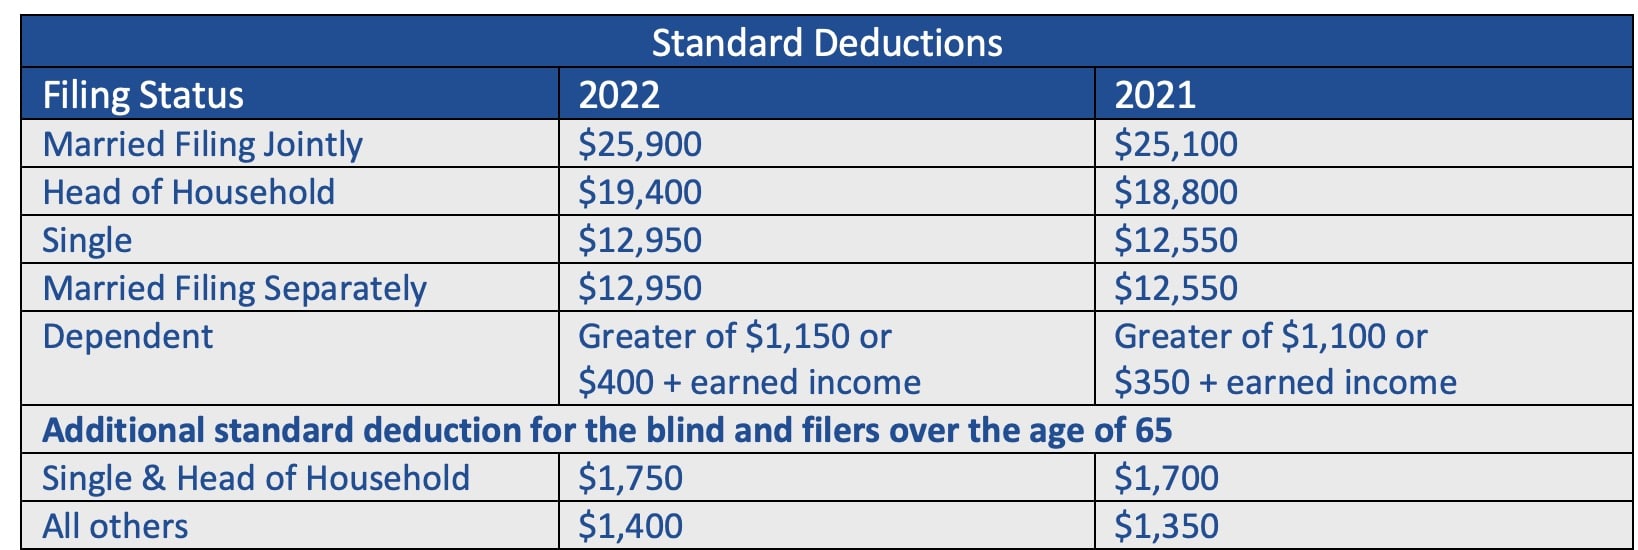 Standard Deductions